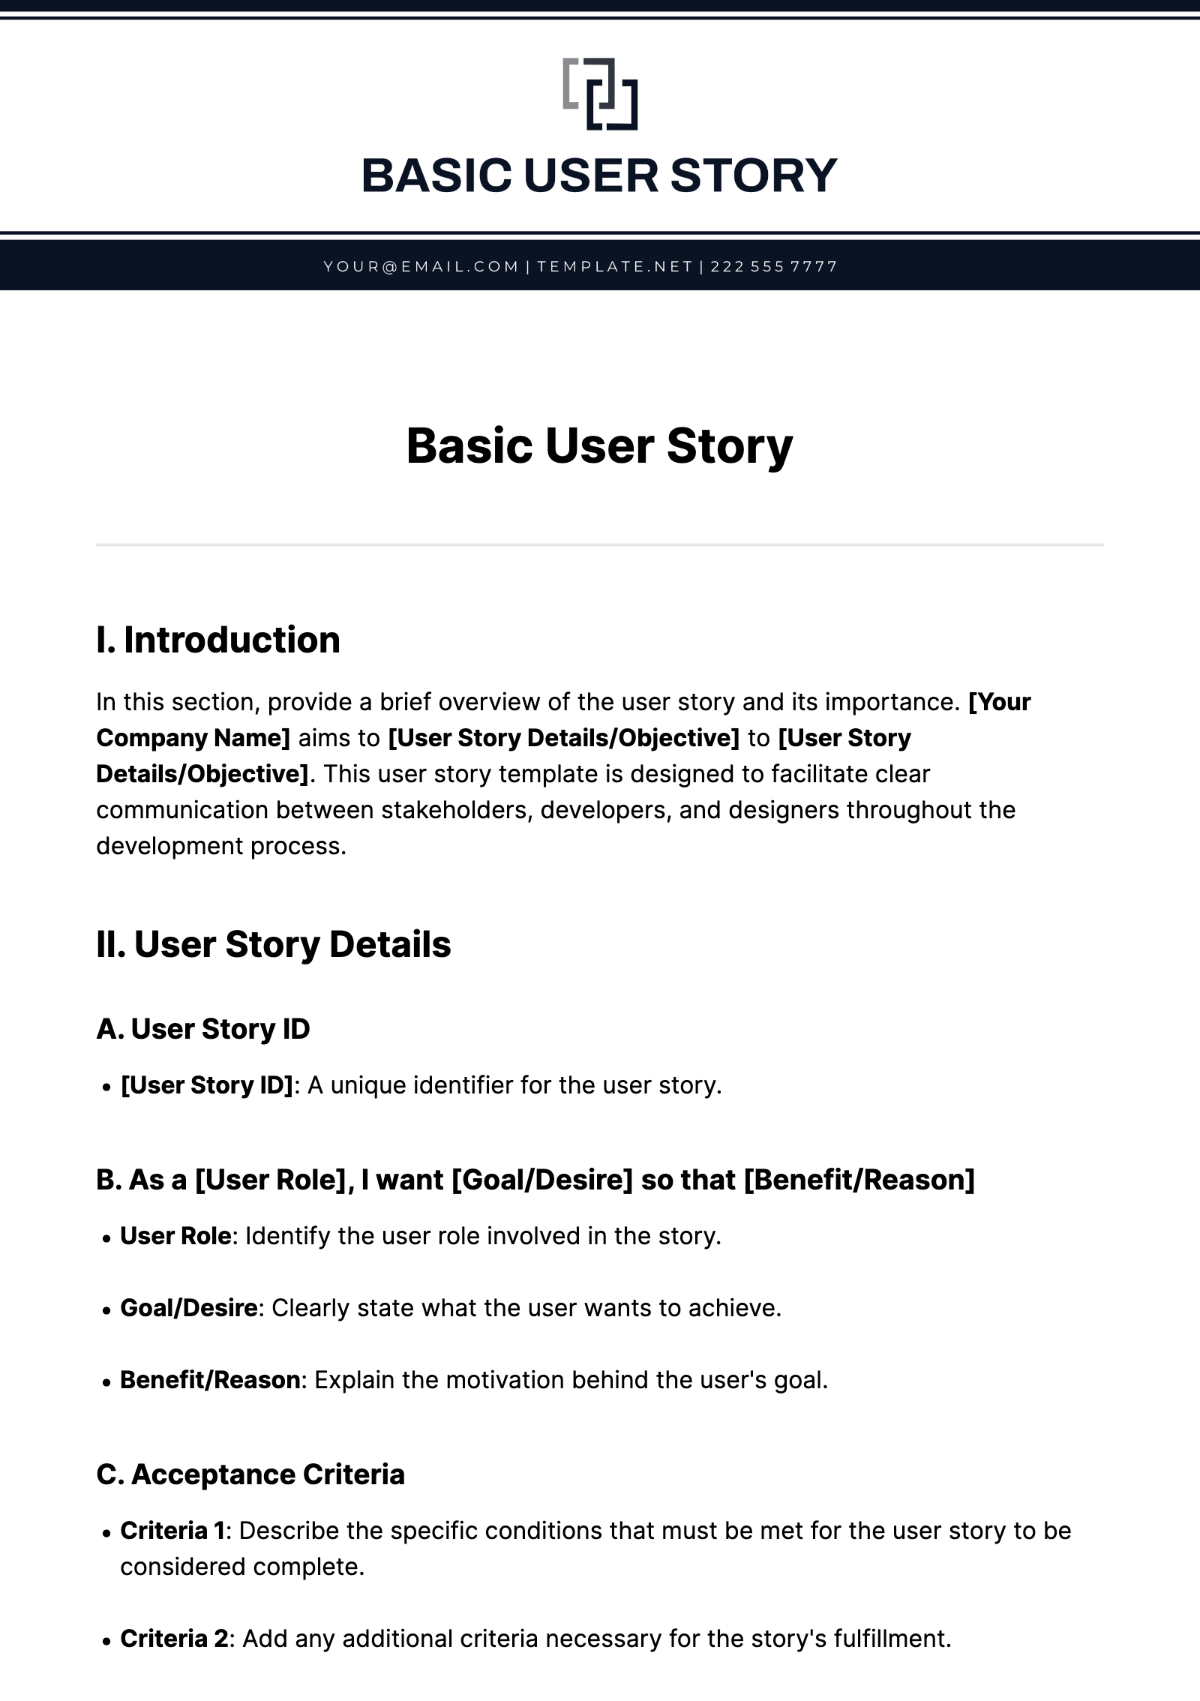 Basic User Story Template